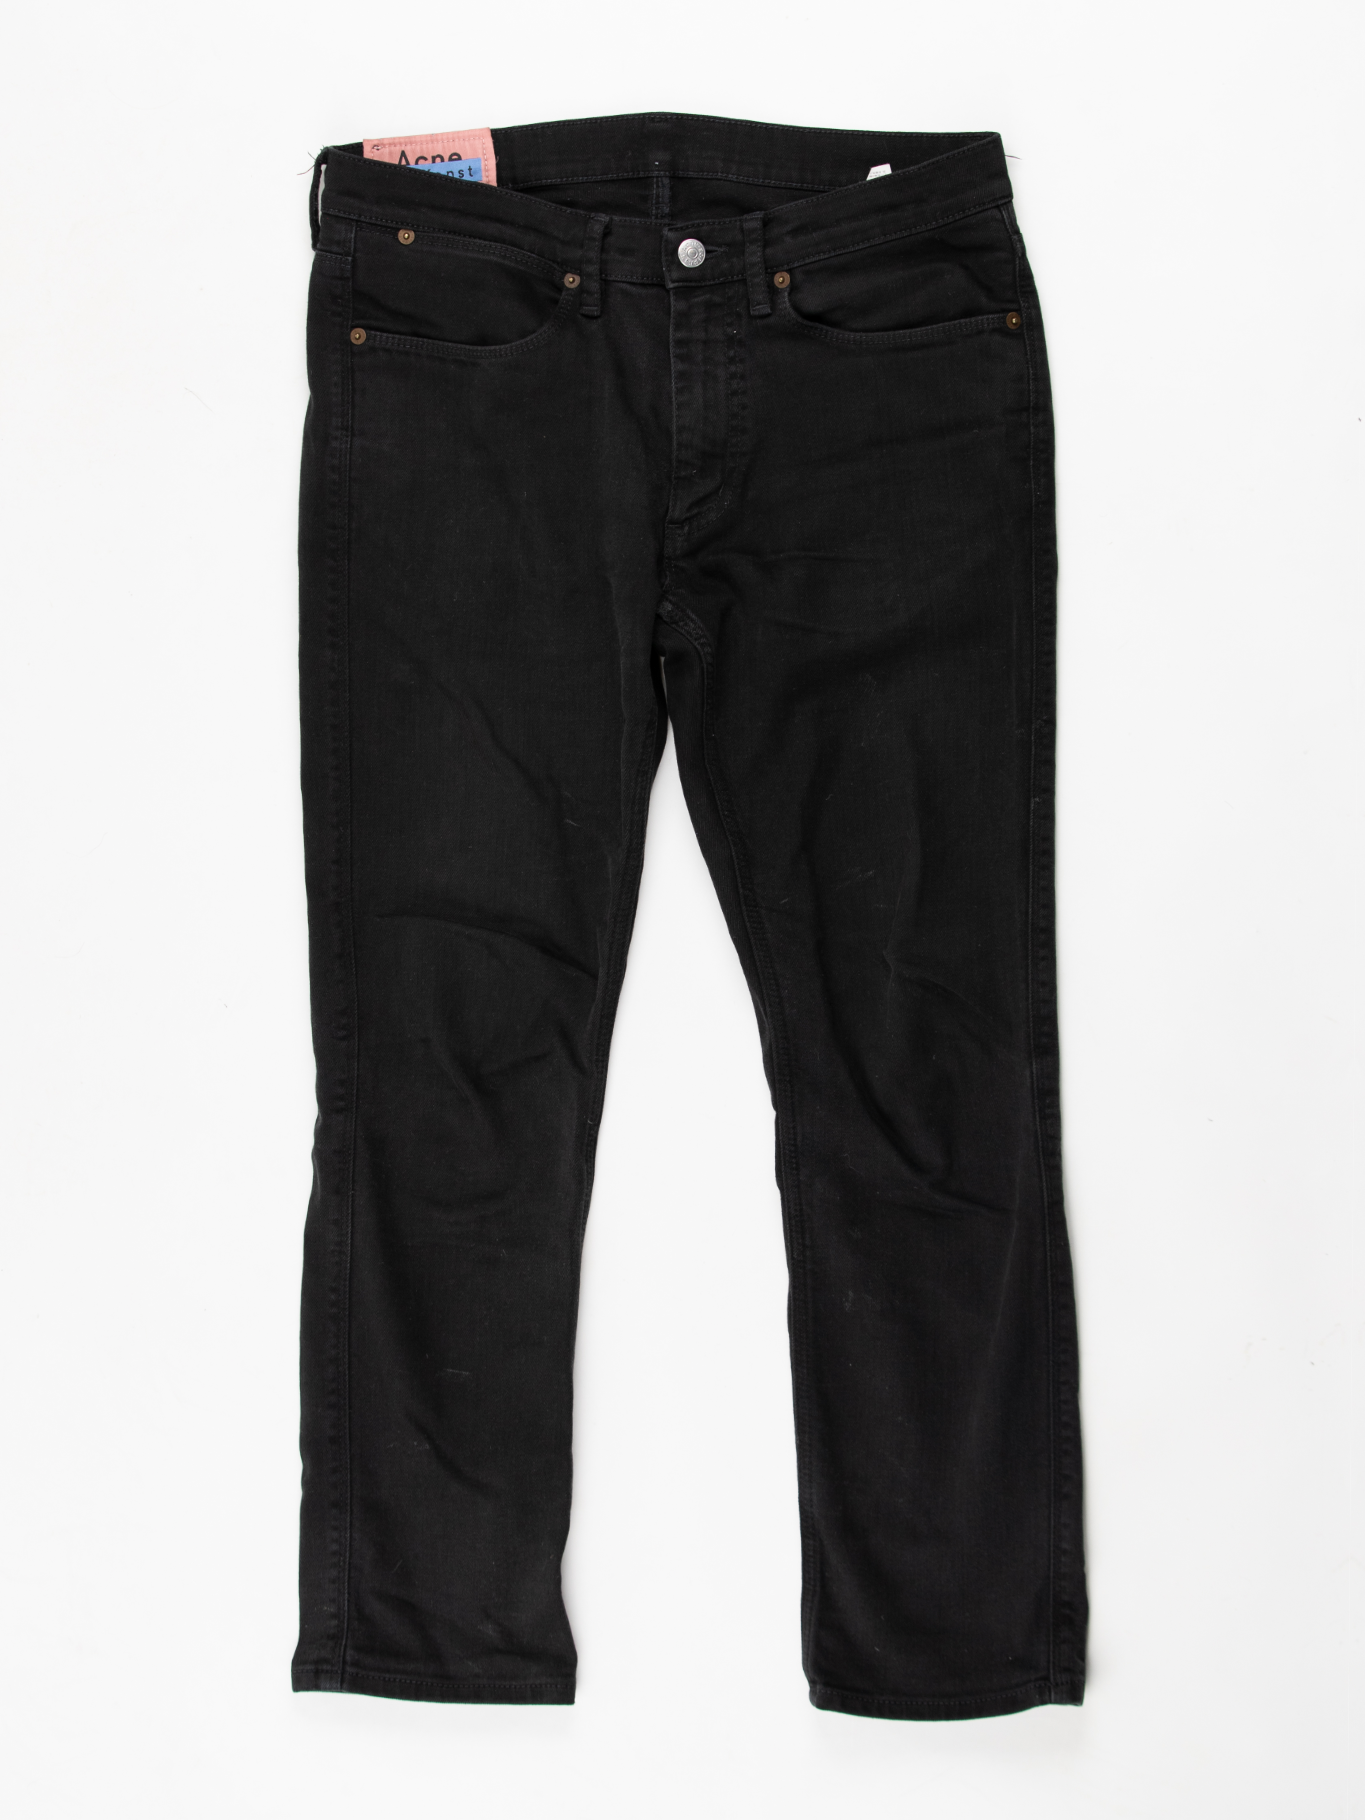 'Blå Konst' Black Denim Jeans